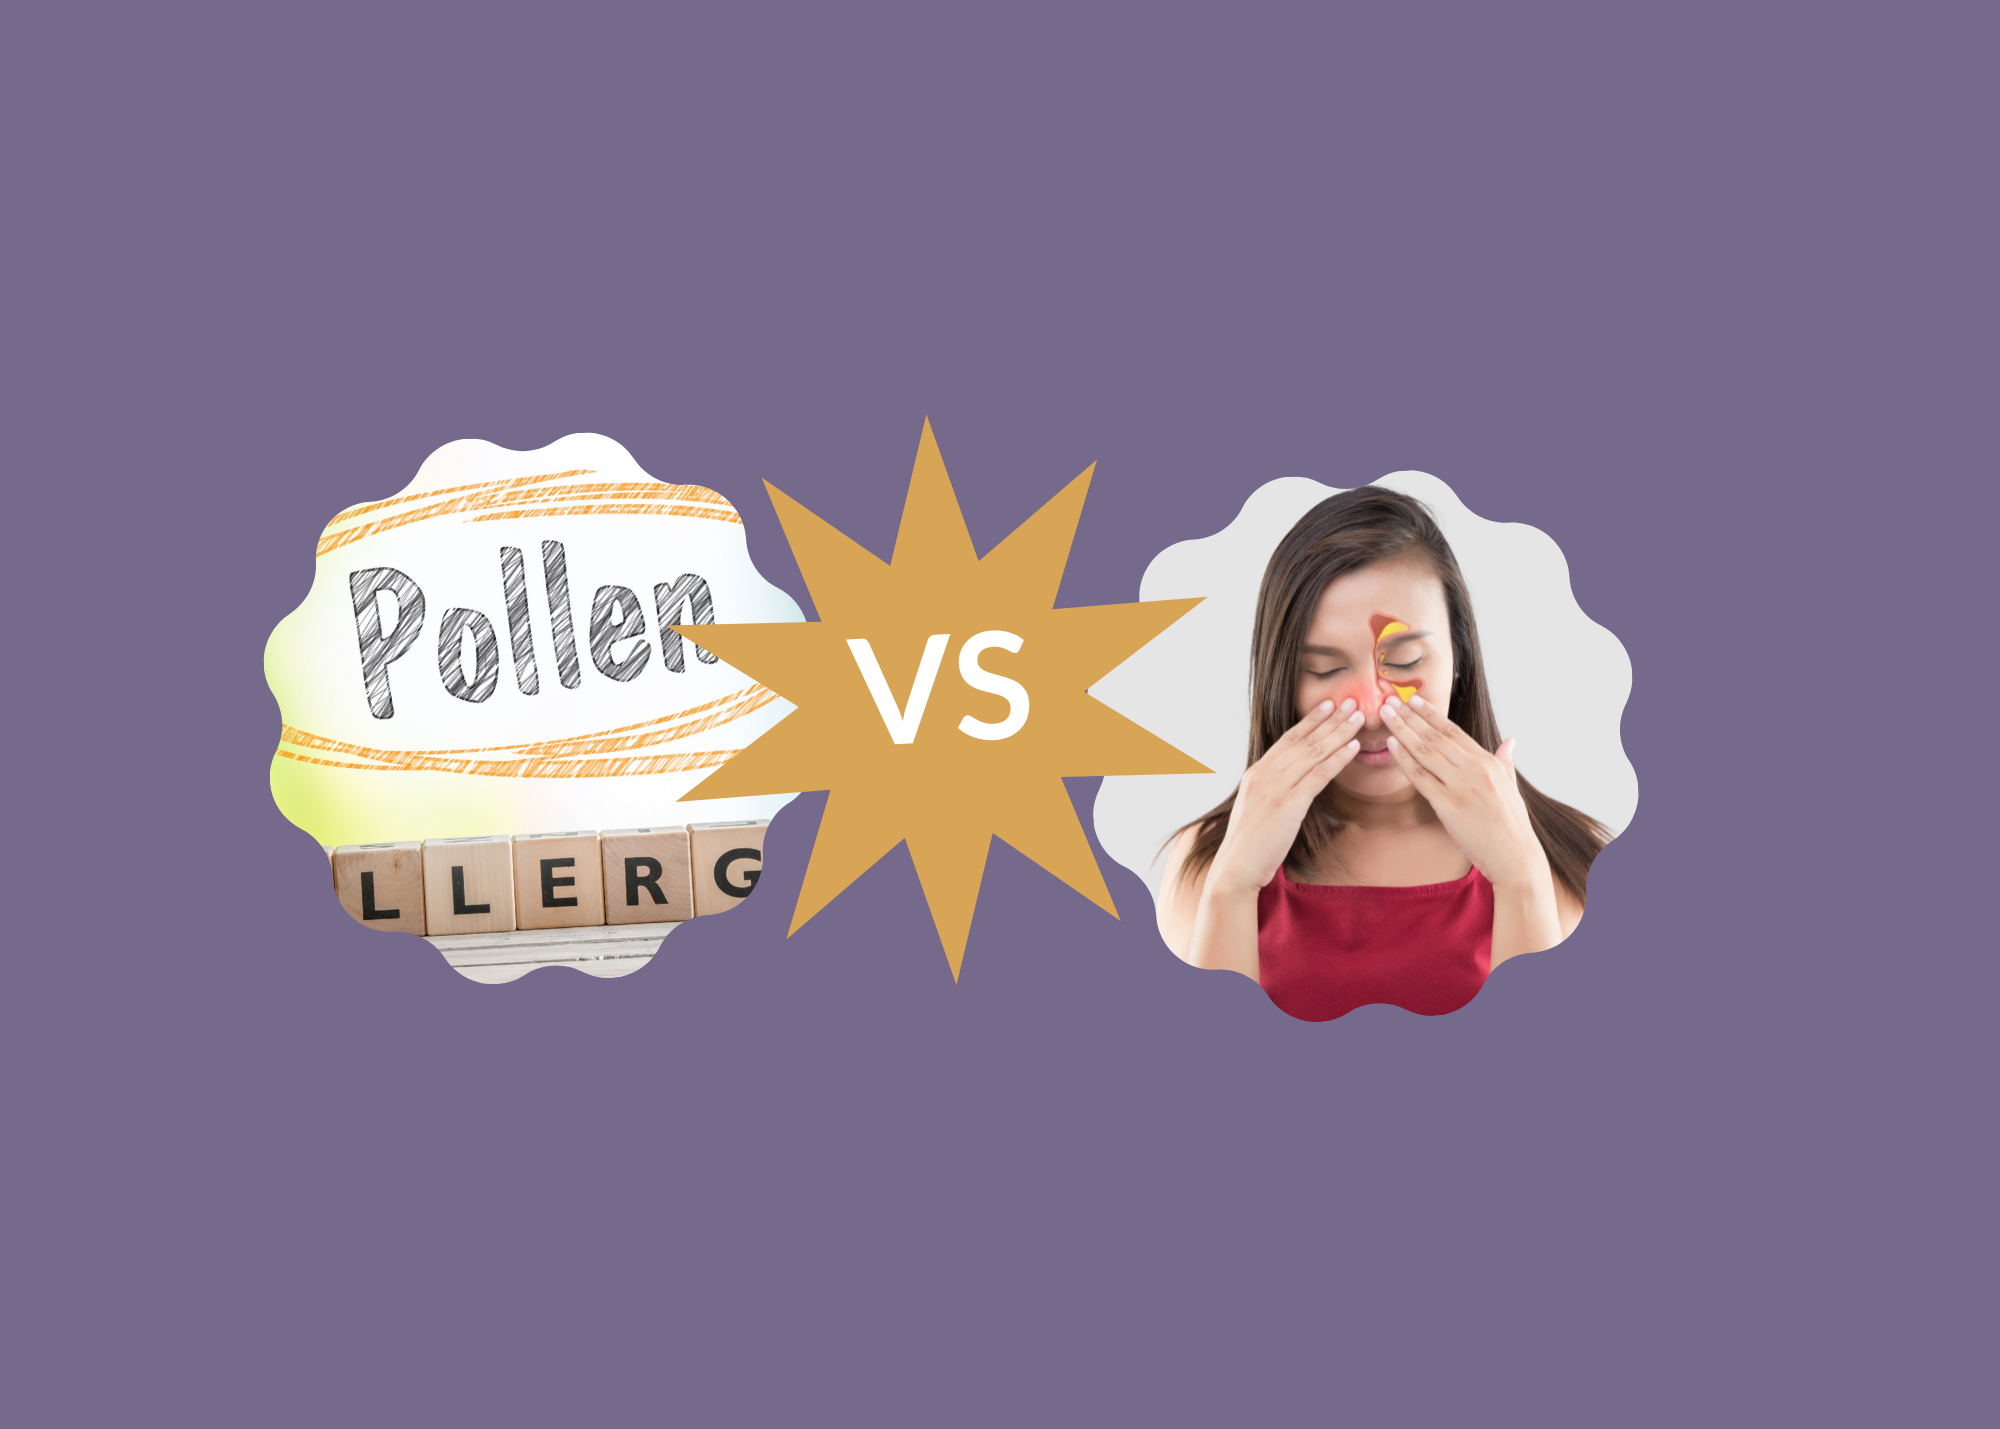 Pollen allergy vs sinus